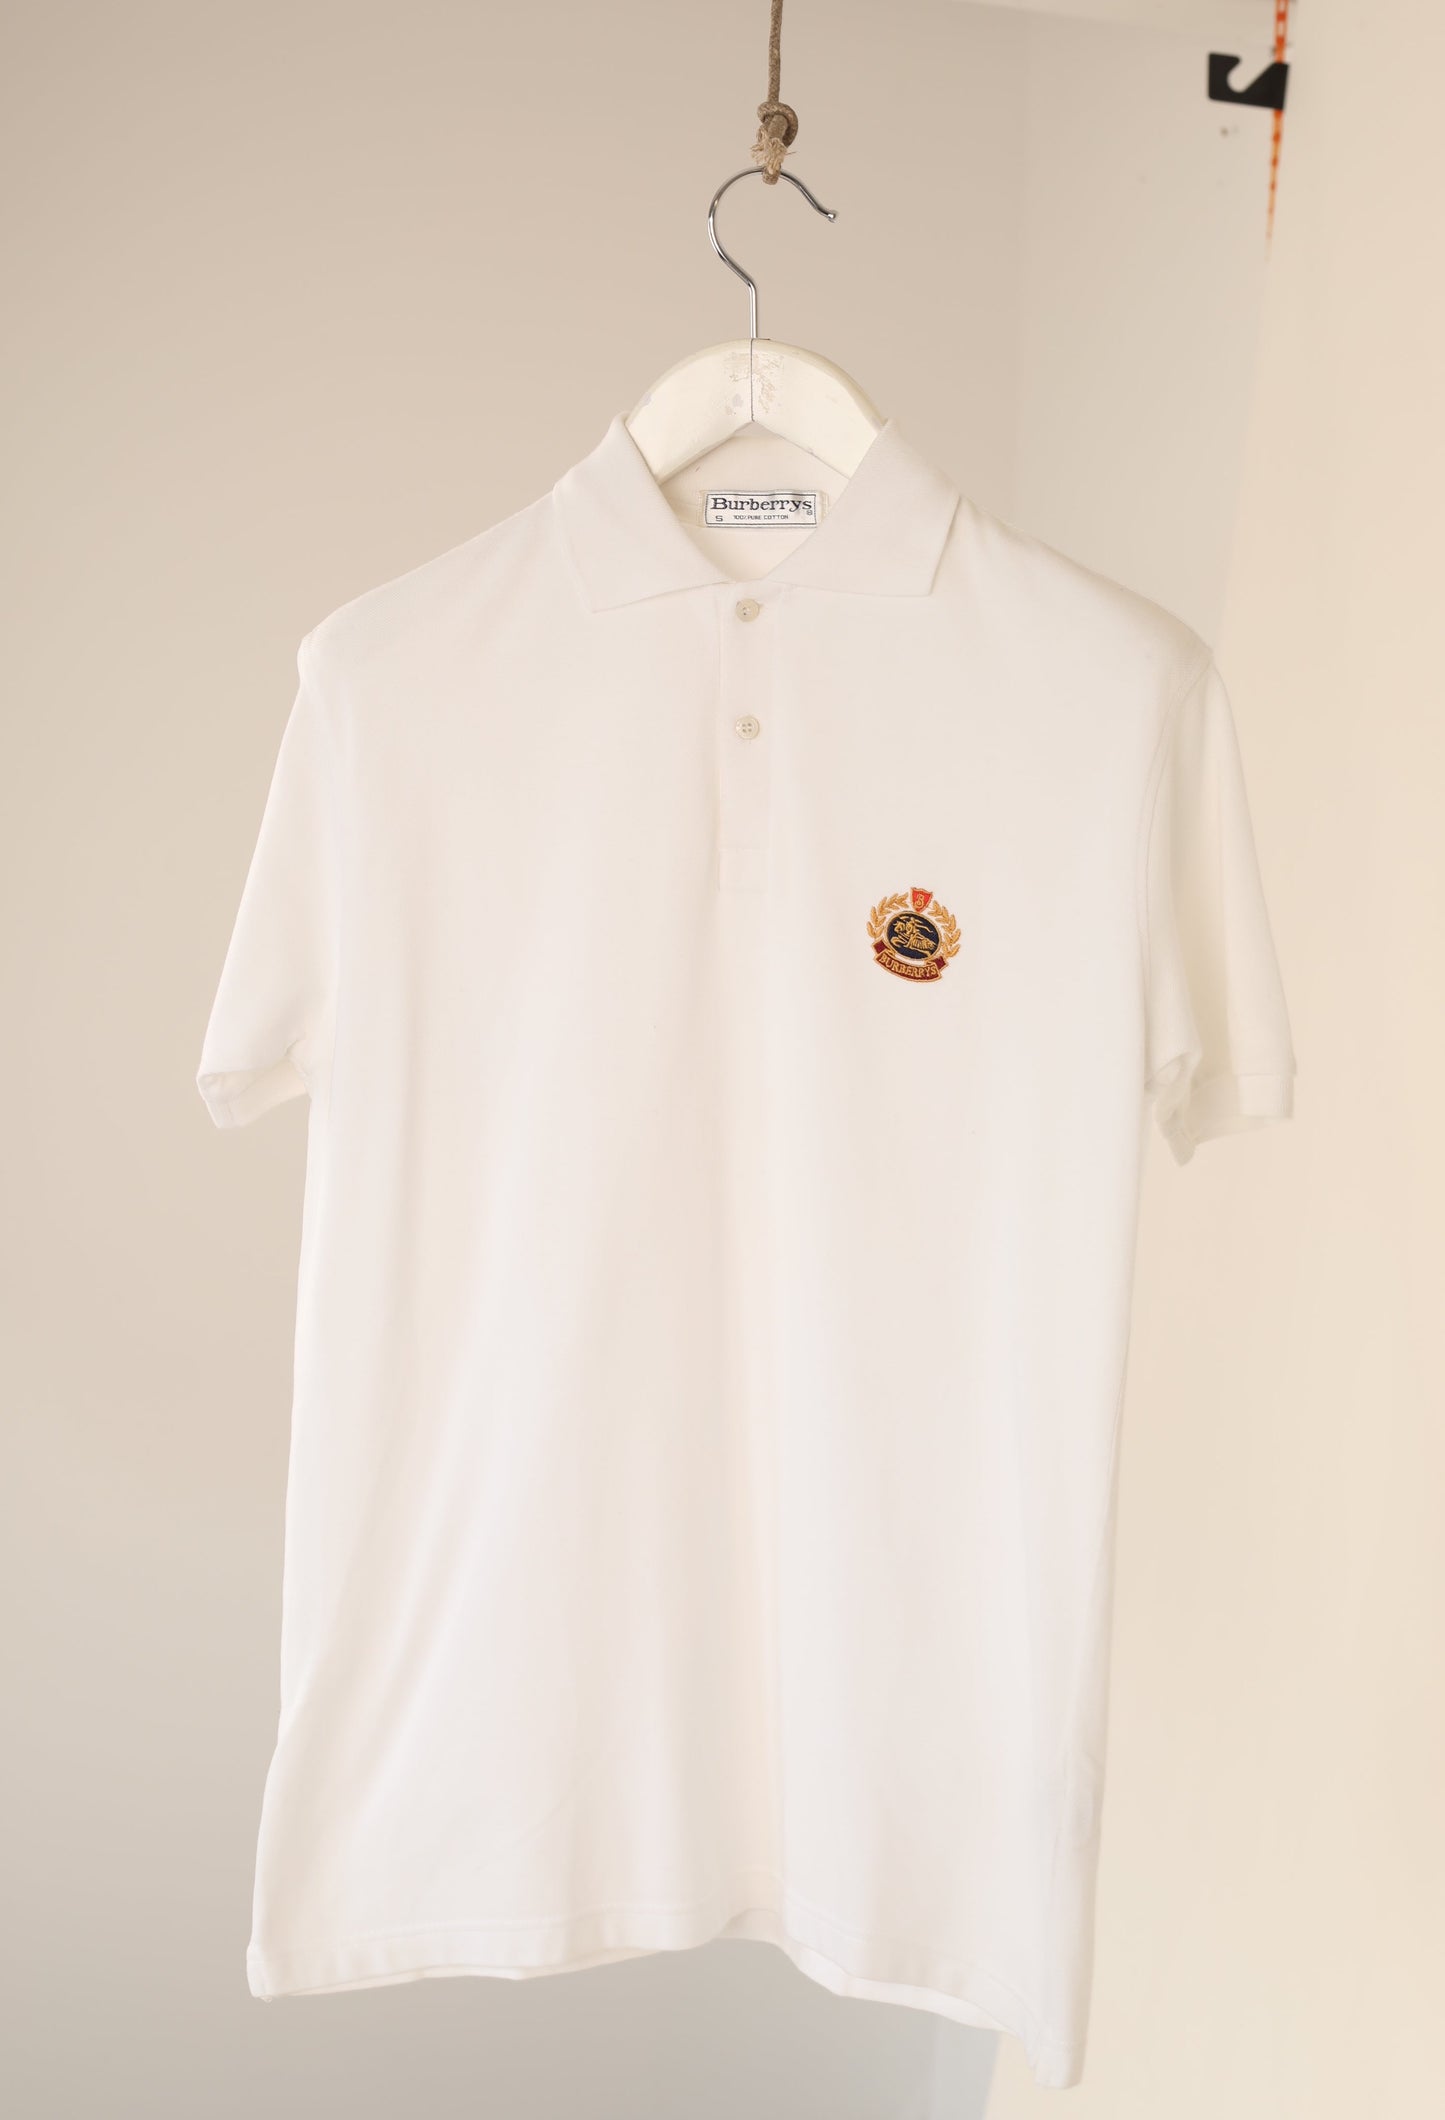 Vintage 90s Burberry's of London crest logo polo shirt